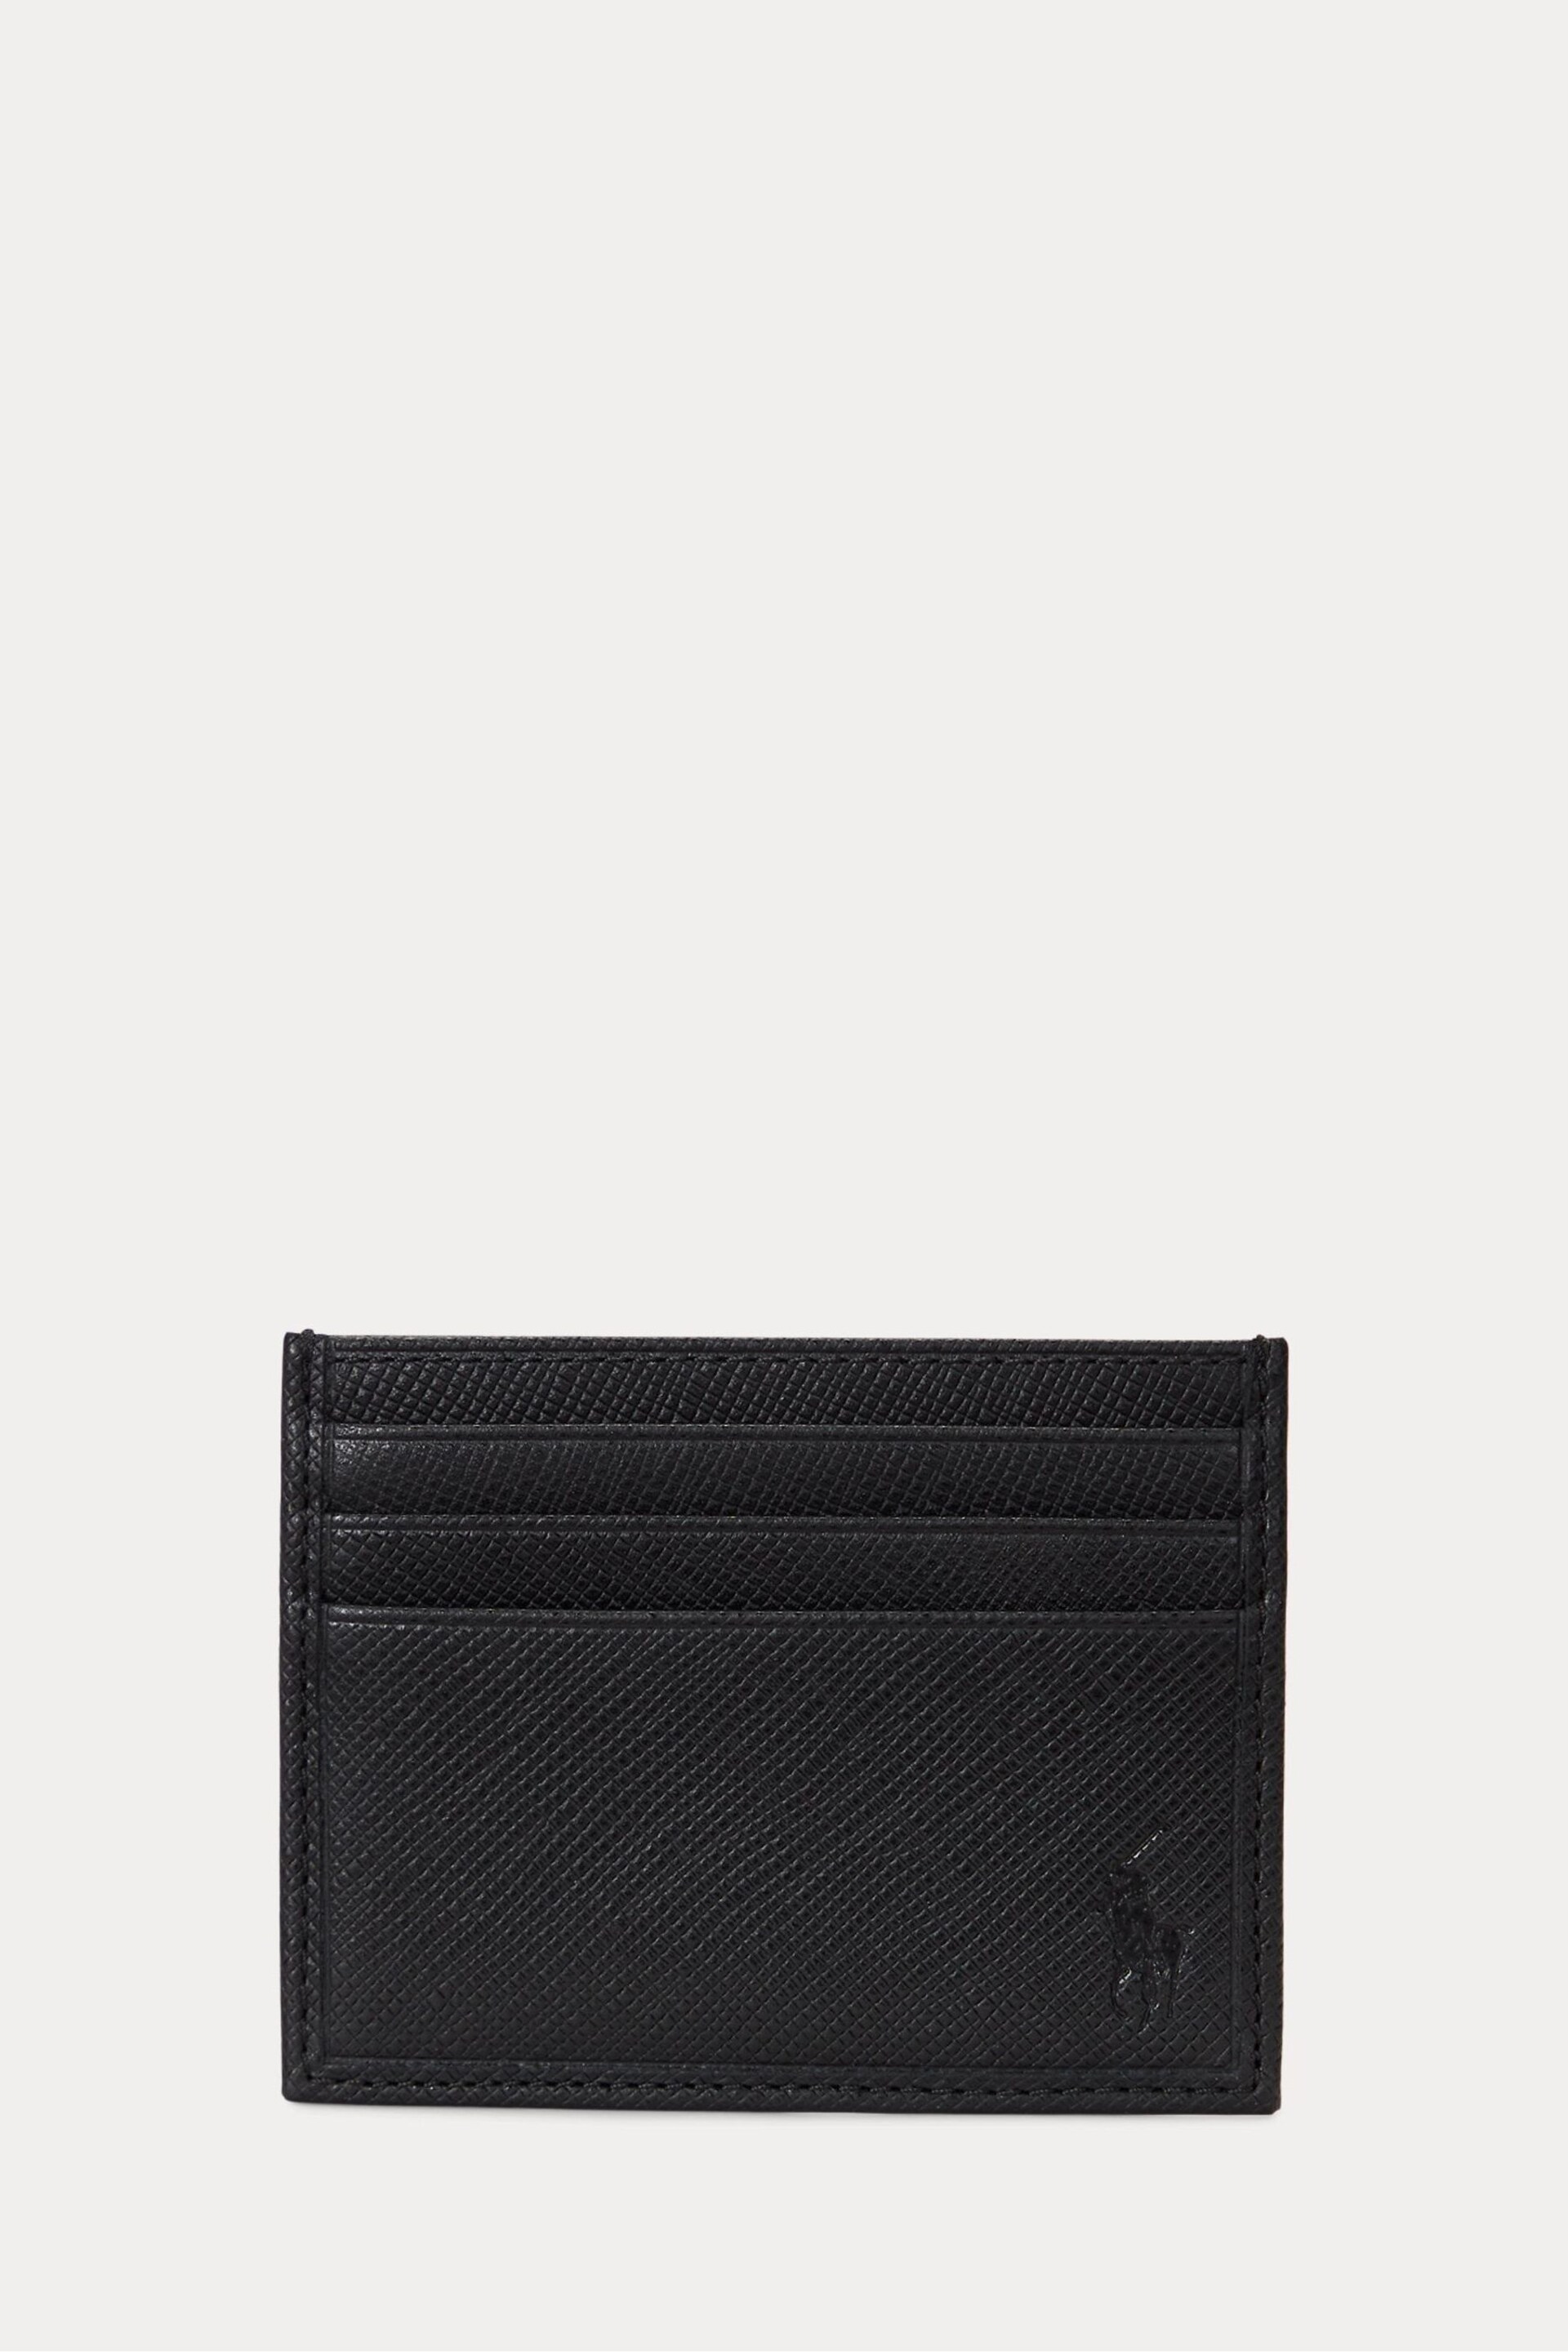 Polo Ralph Lauren Black Card Case - Image 2 of 2